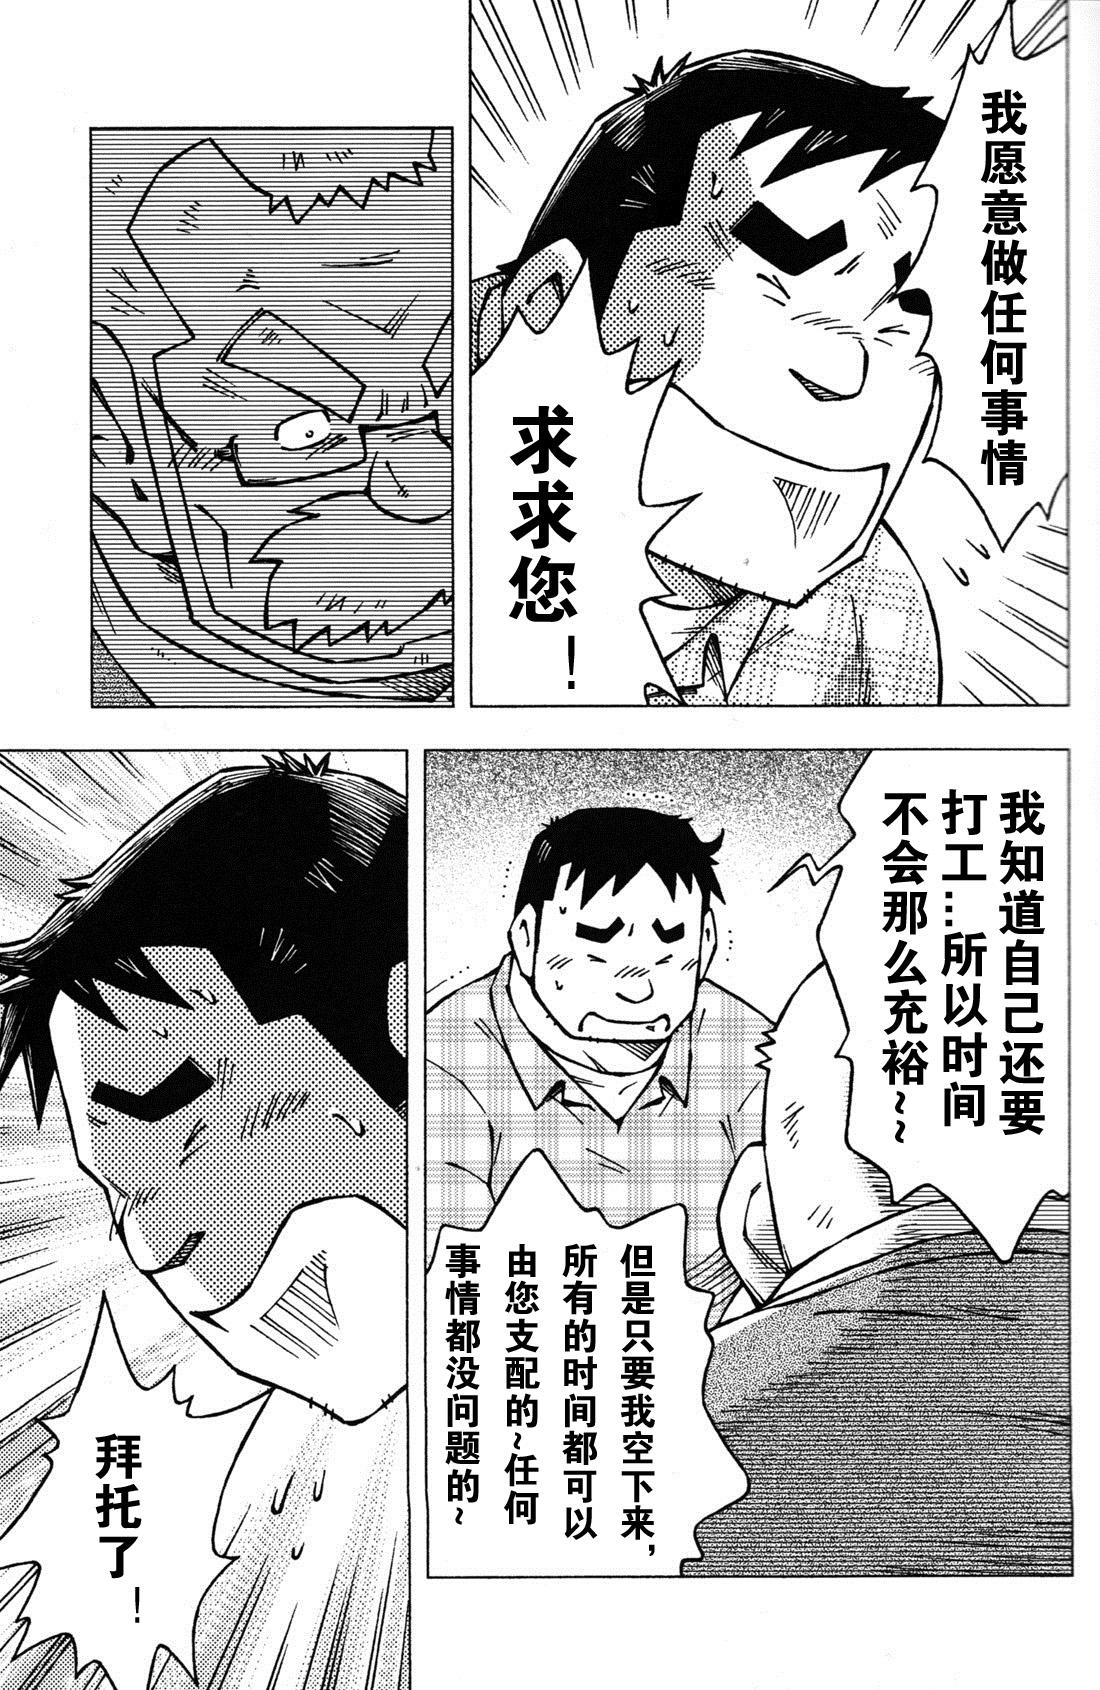 From Sensei no Tokoro e Gilf - Page 7